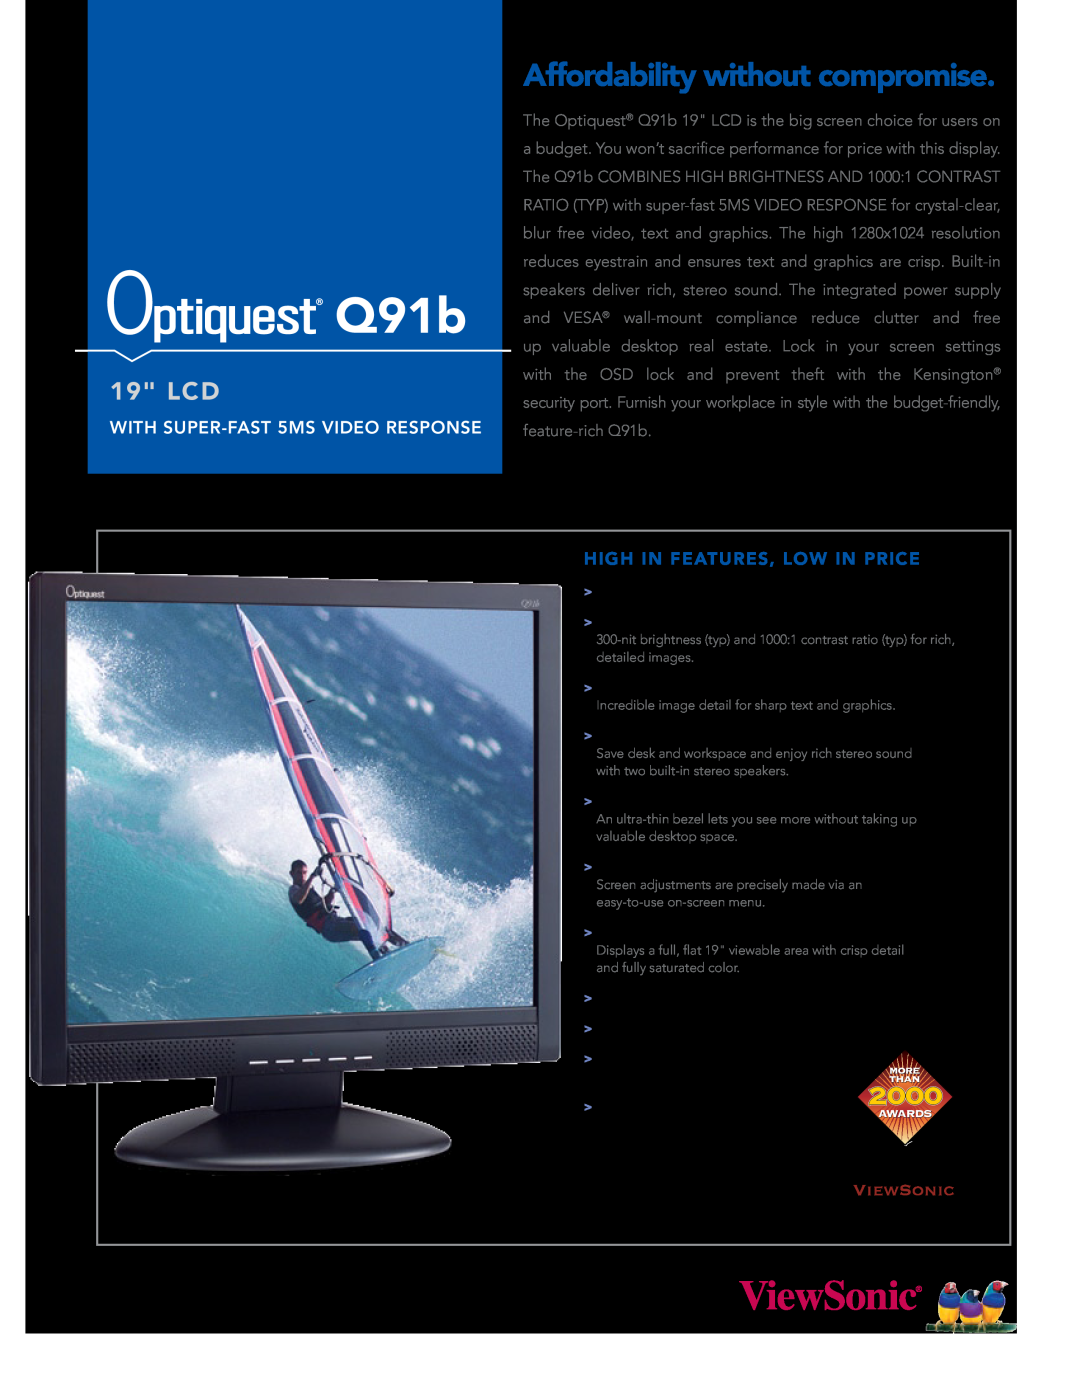 ViewSonic Q91B manual Q91b LCD Display, Model No. VS12118 